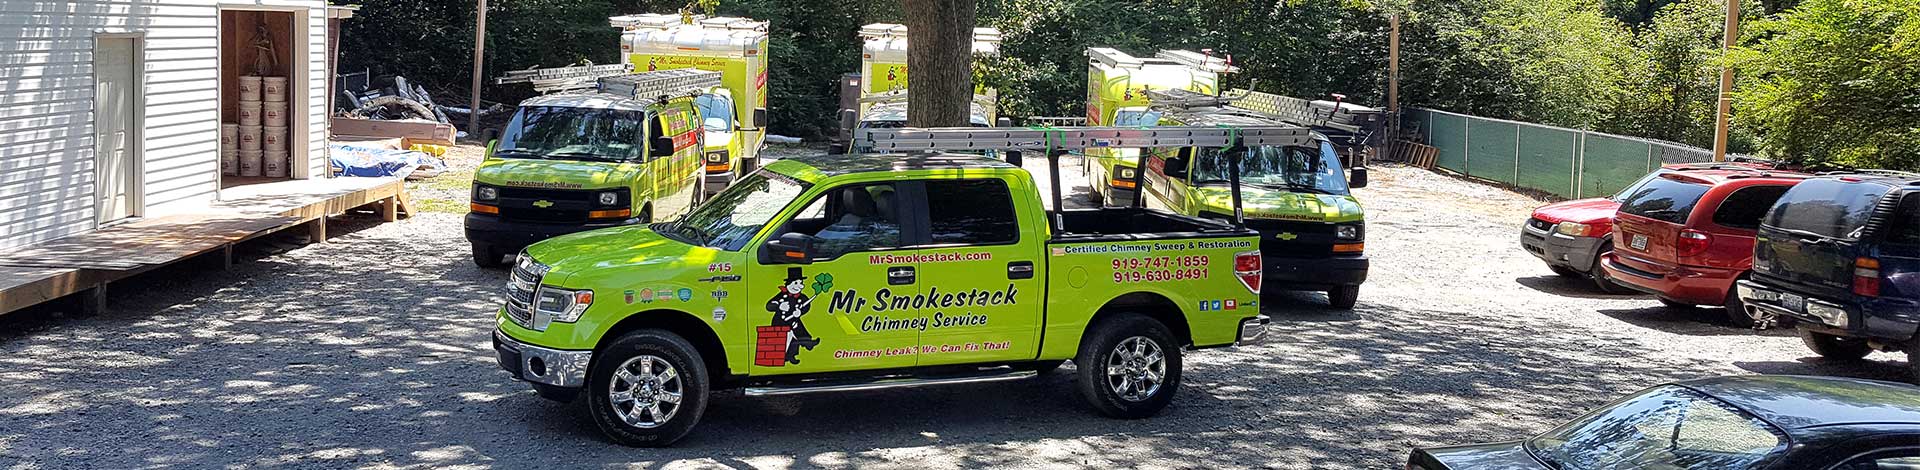 Mr. Smokestack service trucks